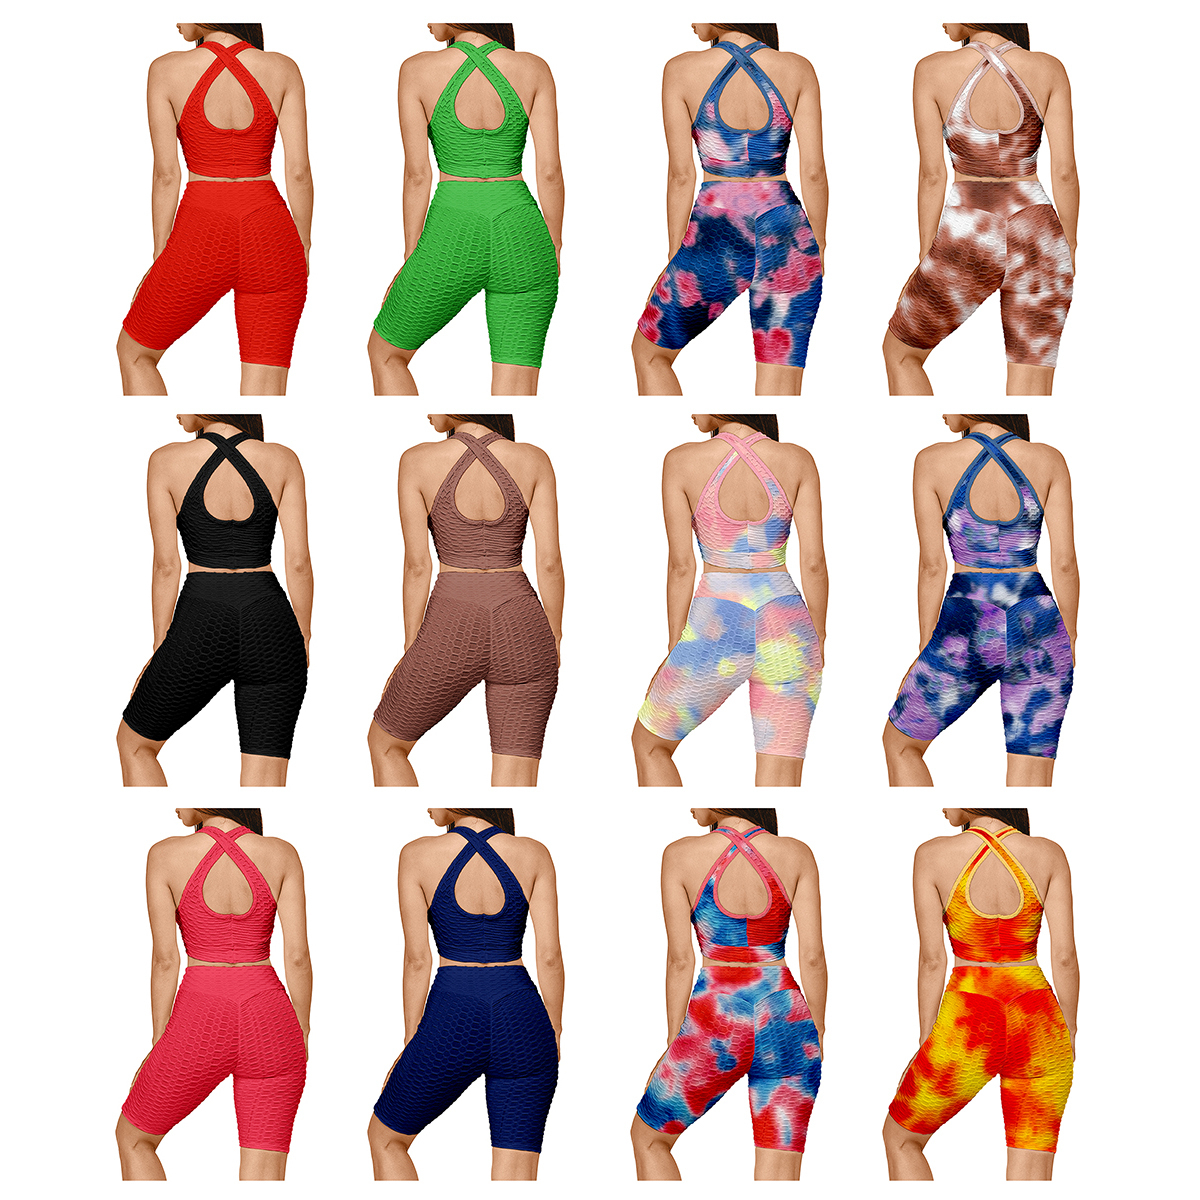 4-Piece Women's Anti Cellulite Sports Bra & High Waisted Biker Shorts Workout Yoga Set - Tie-Dye, Small